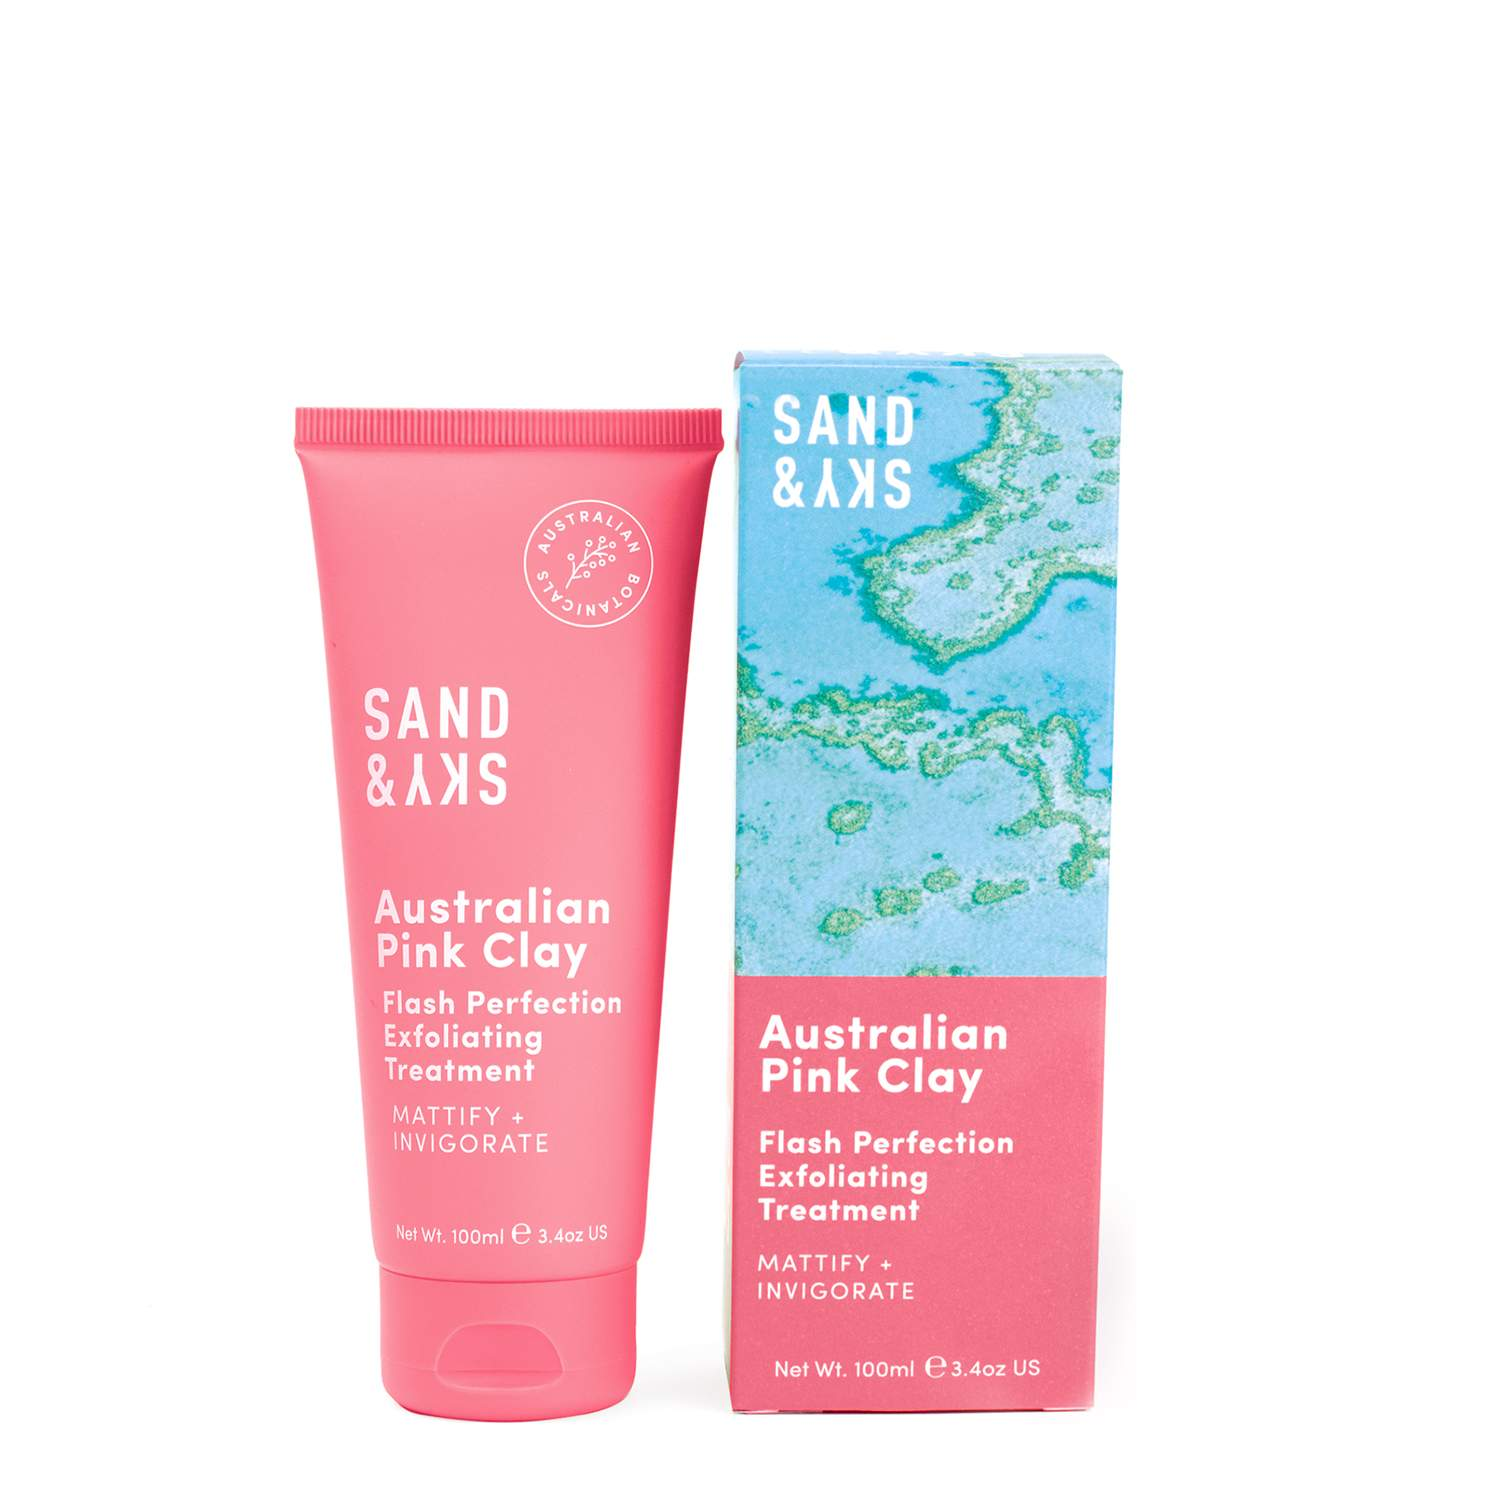 Sand & Sky Australian Pink Clay - Flash Perfection Exfoliating Treatment  1